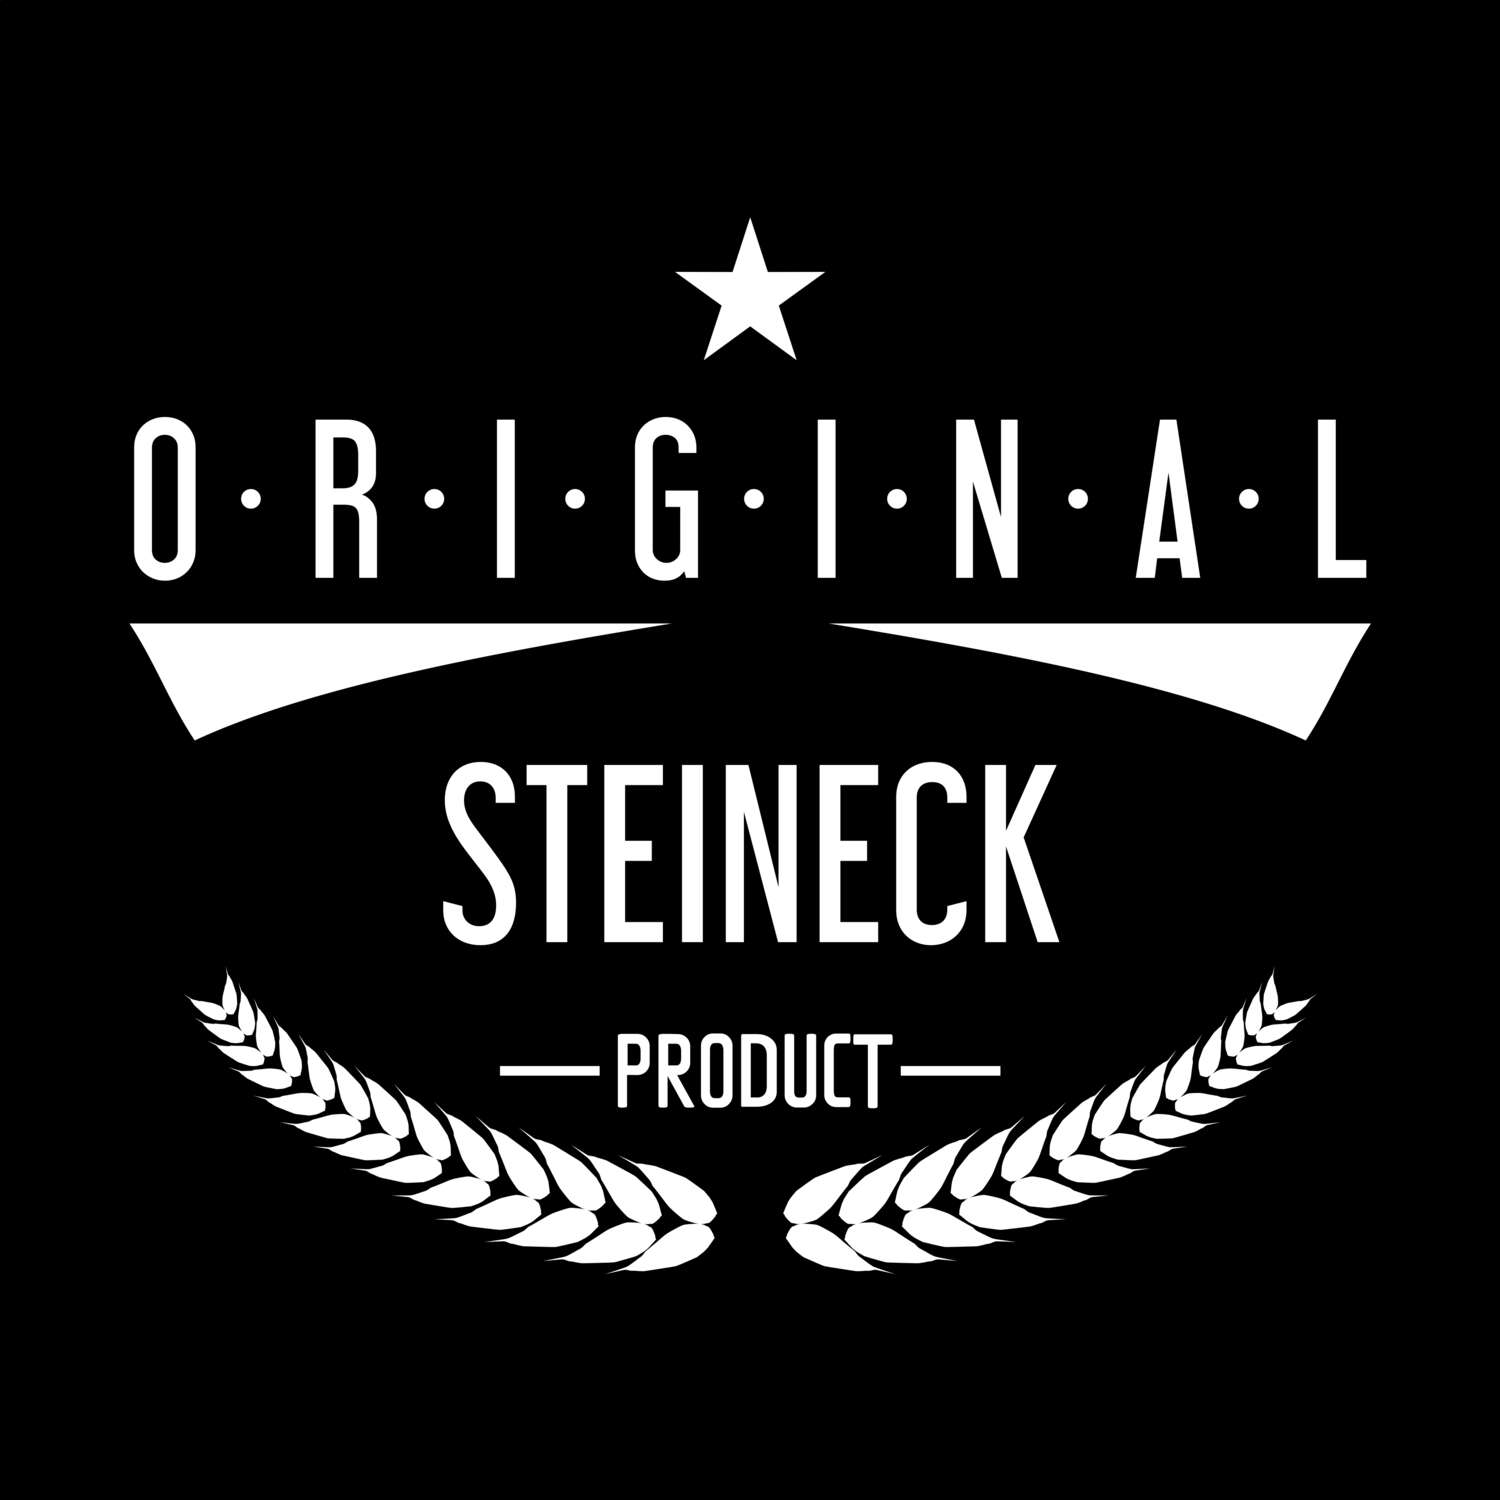 Steineck T-Shirt »Original Product«